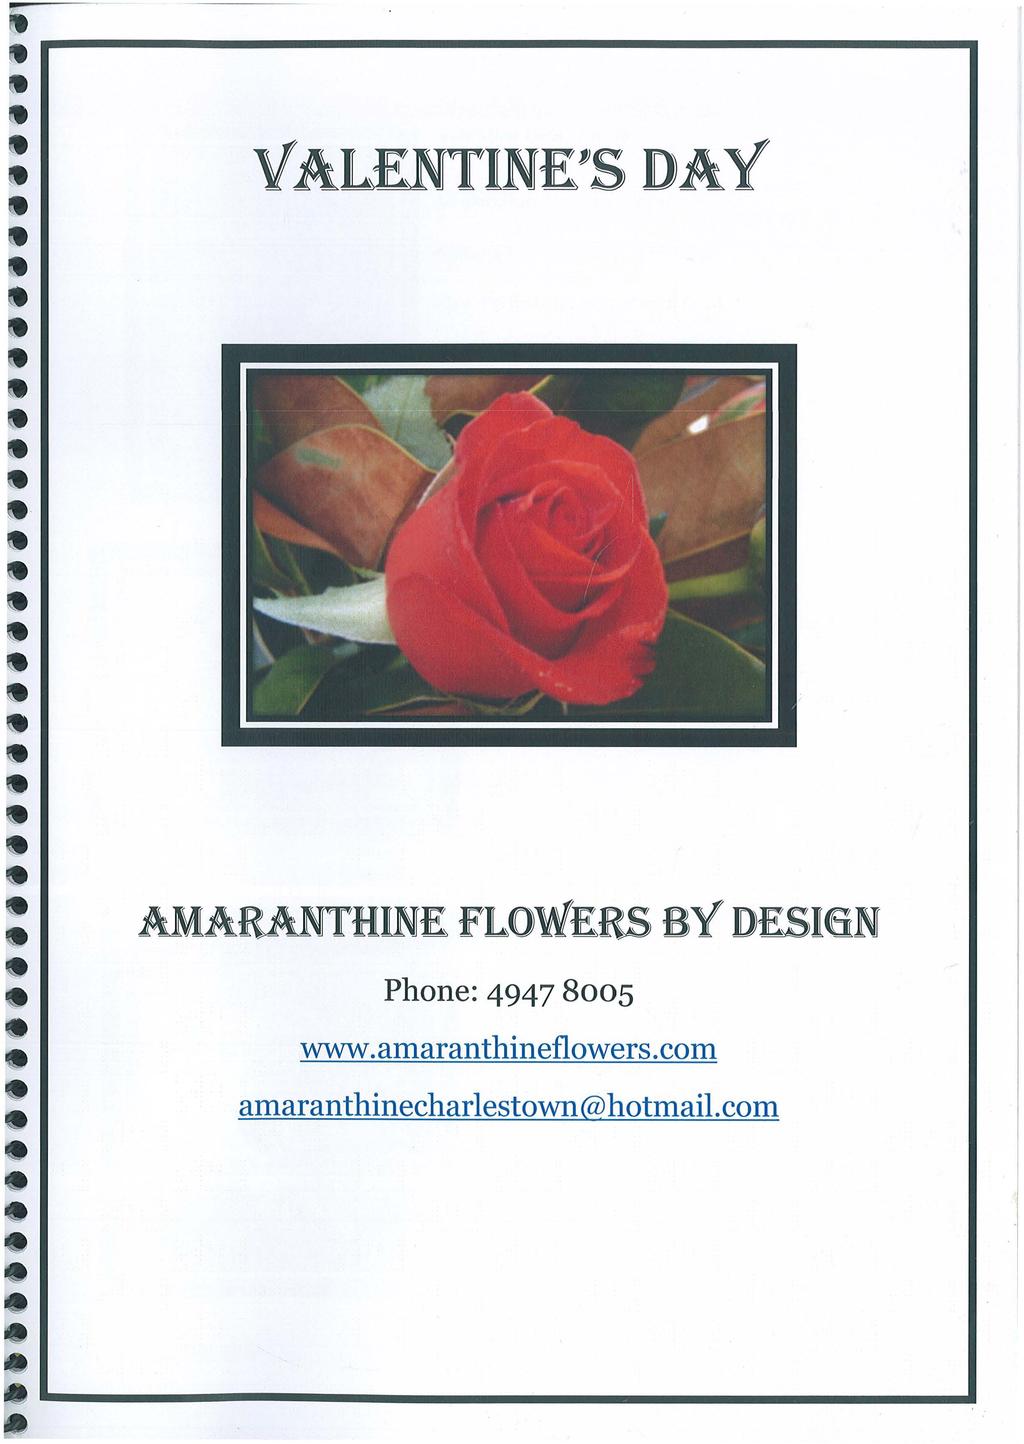 AMARSANTHIN FLO\\f RSS BY DESIGN Phone: 4947 Boos www.